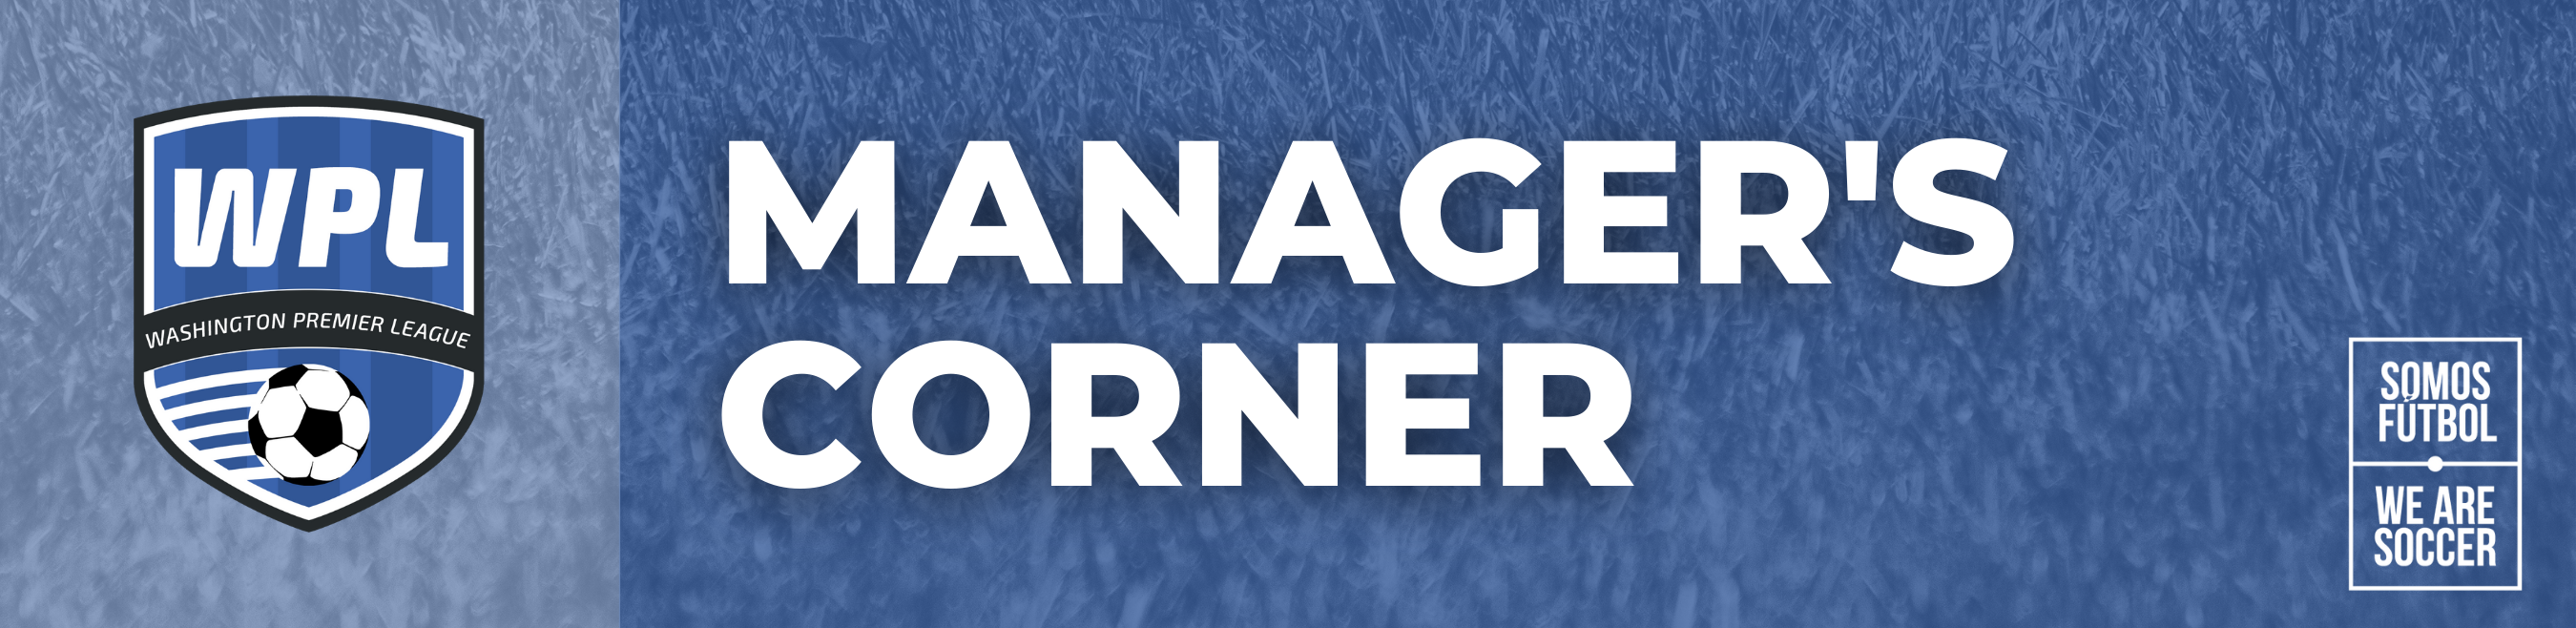 Managers Corner